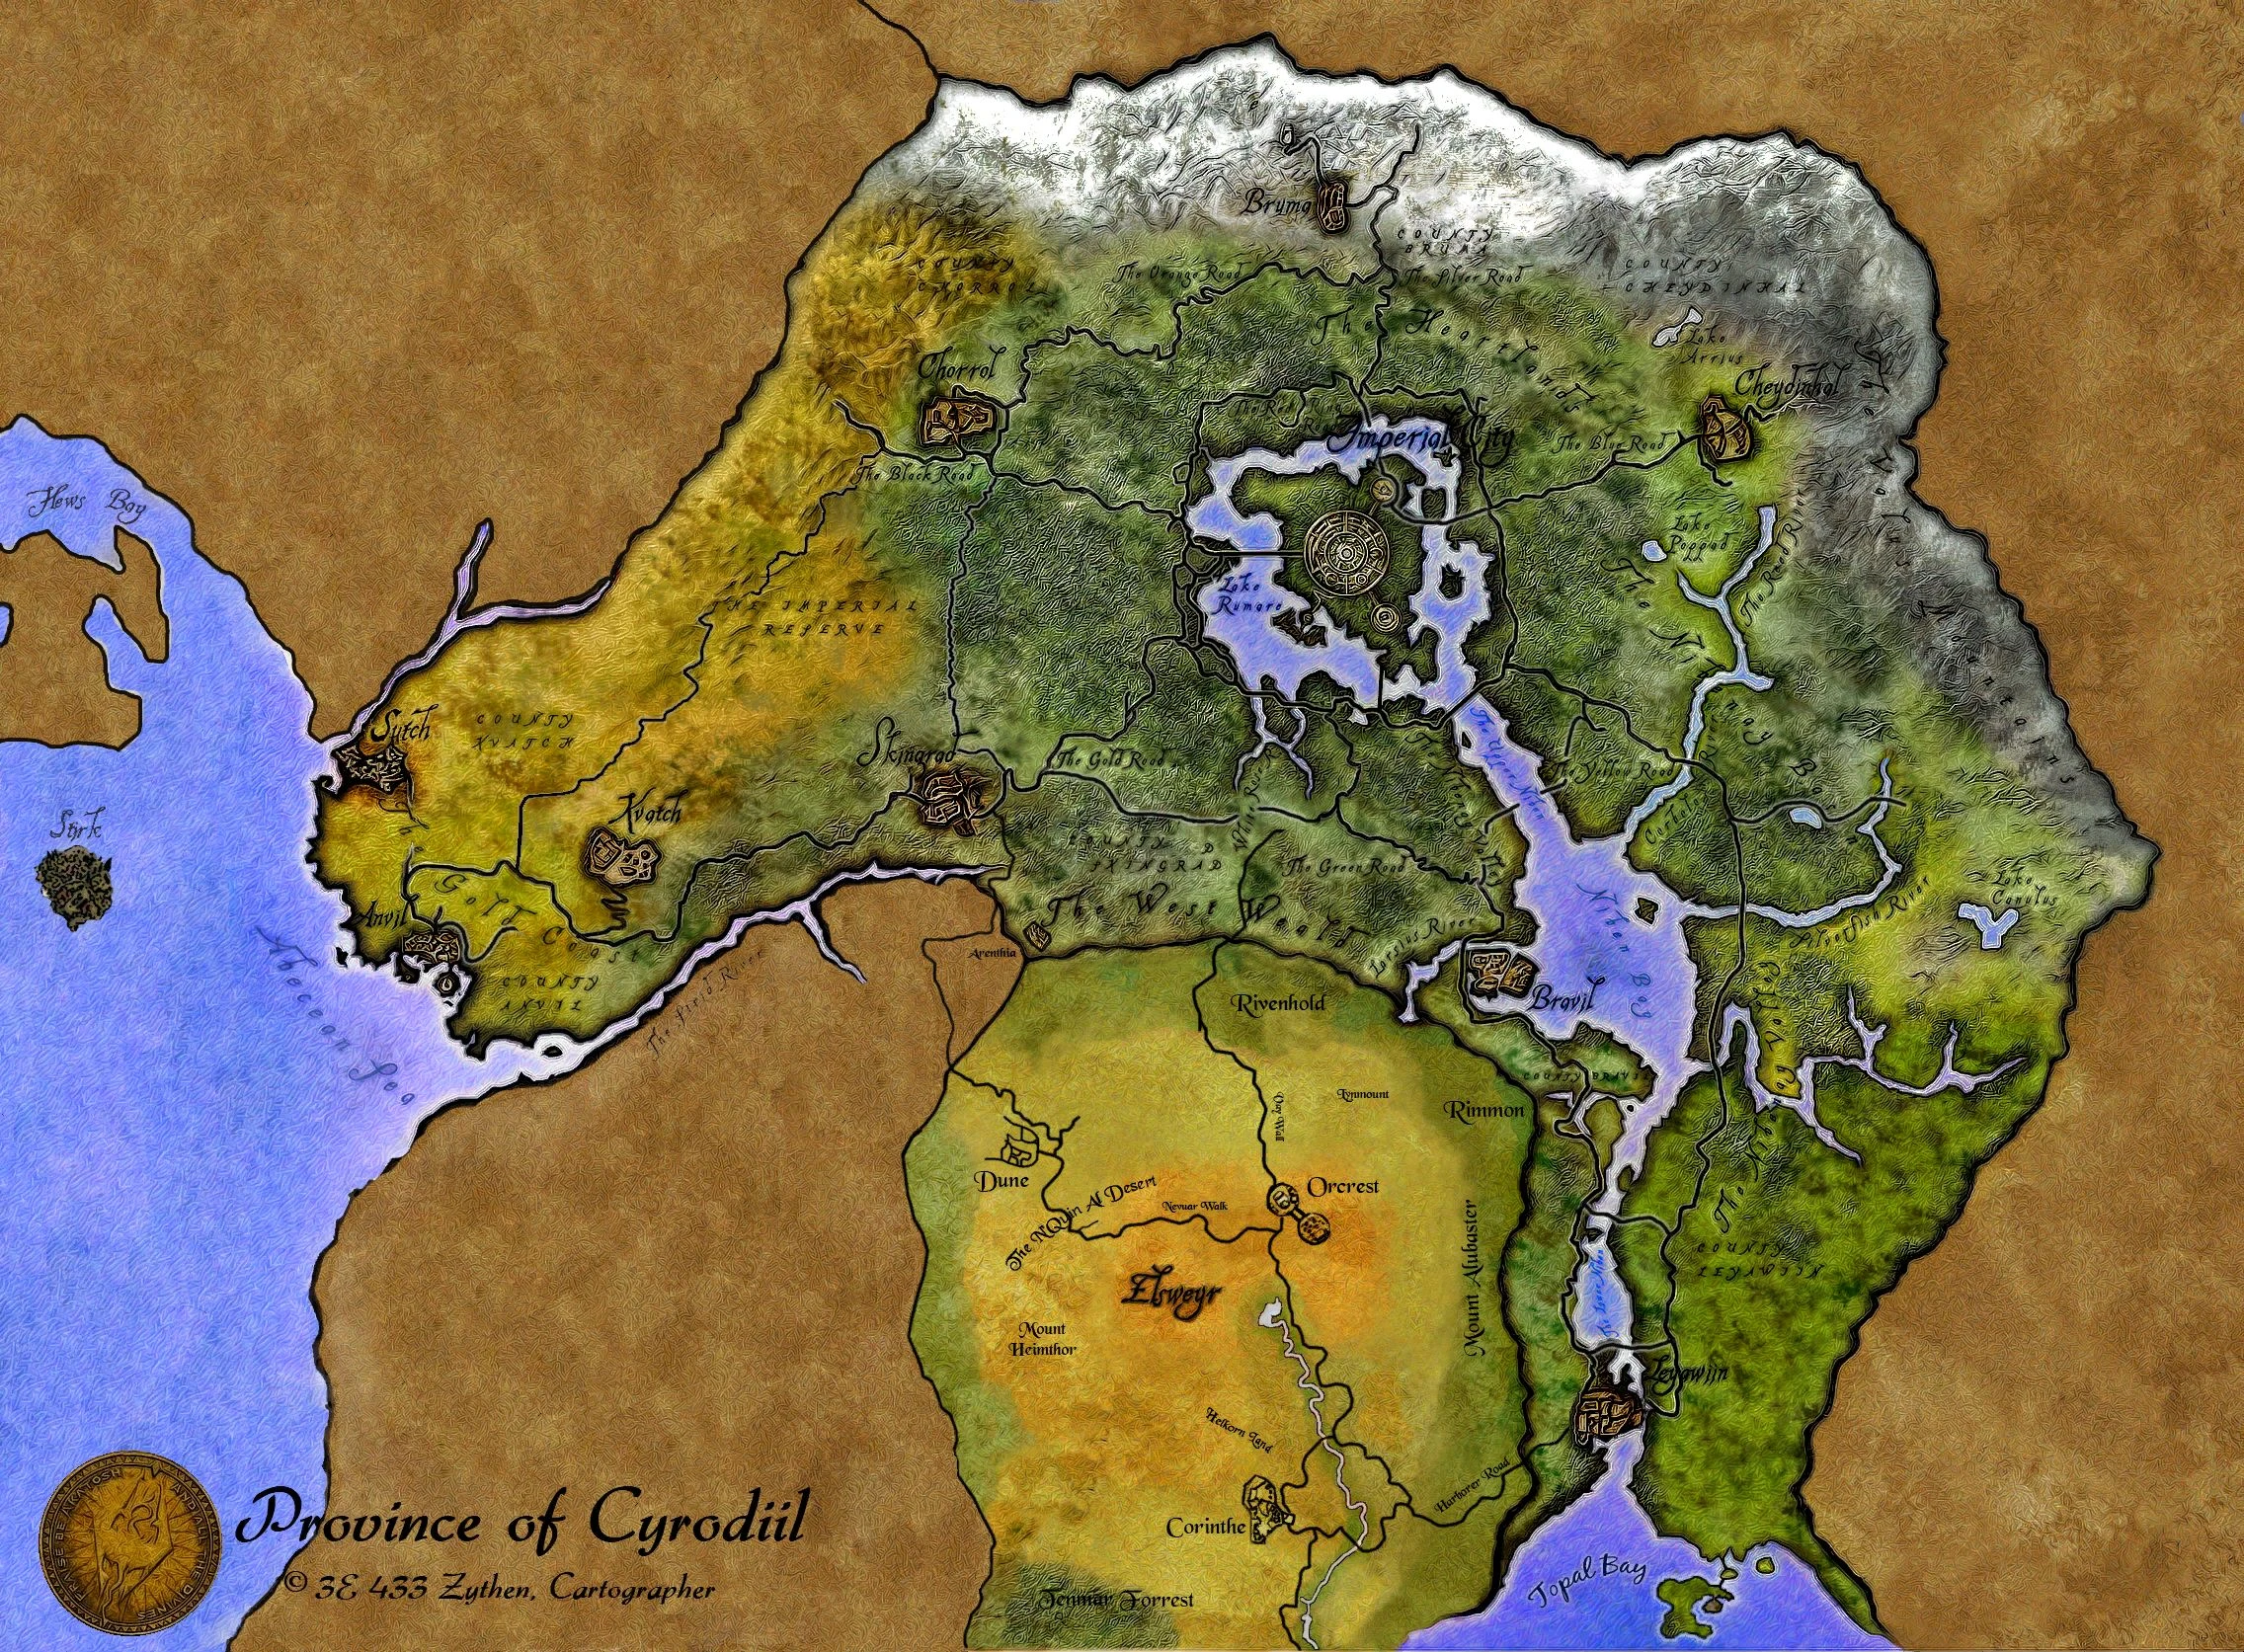 oblivion map compared to skyrim